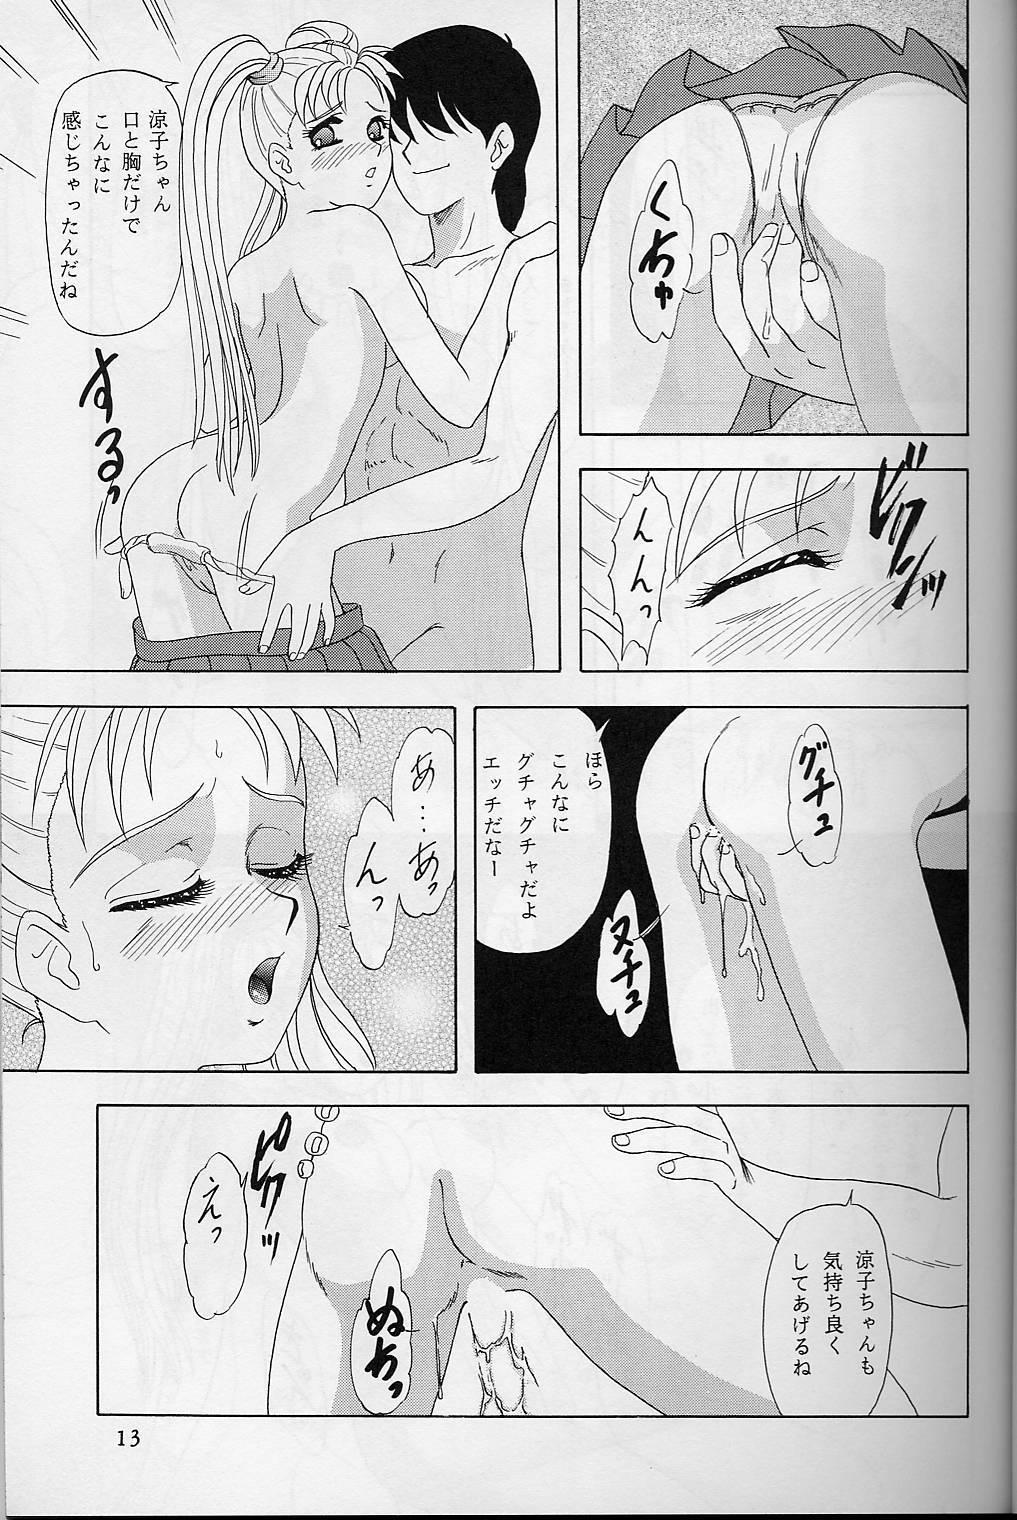 Juicy Lunch Box 32 - Toshishita no Onnanoko 3 - Kakyuusei Negro - Page 12